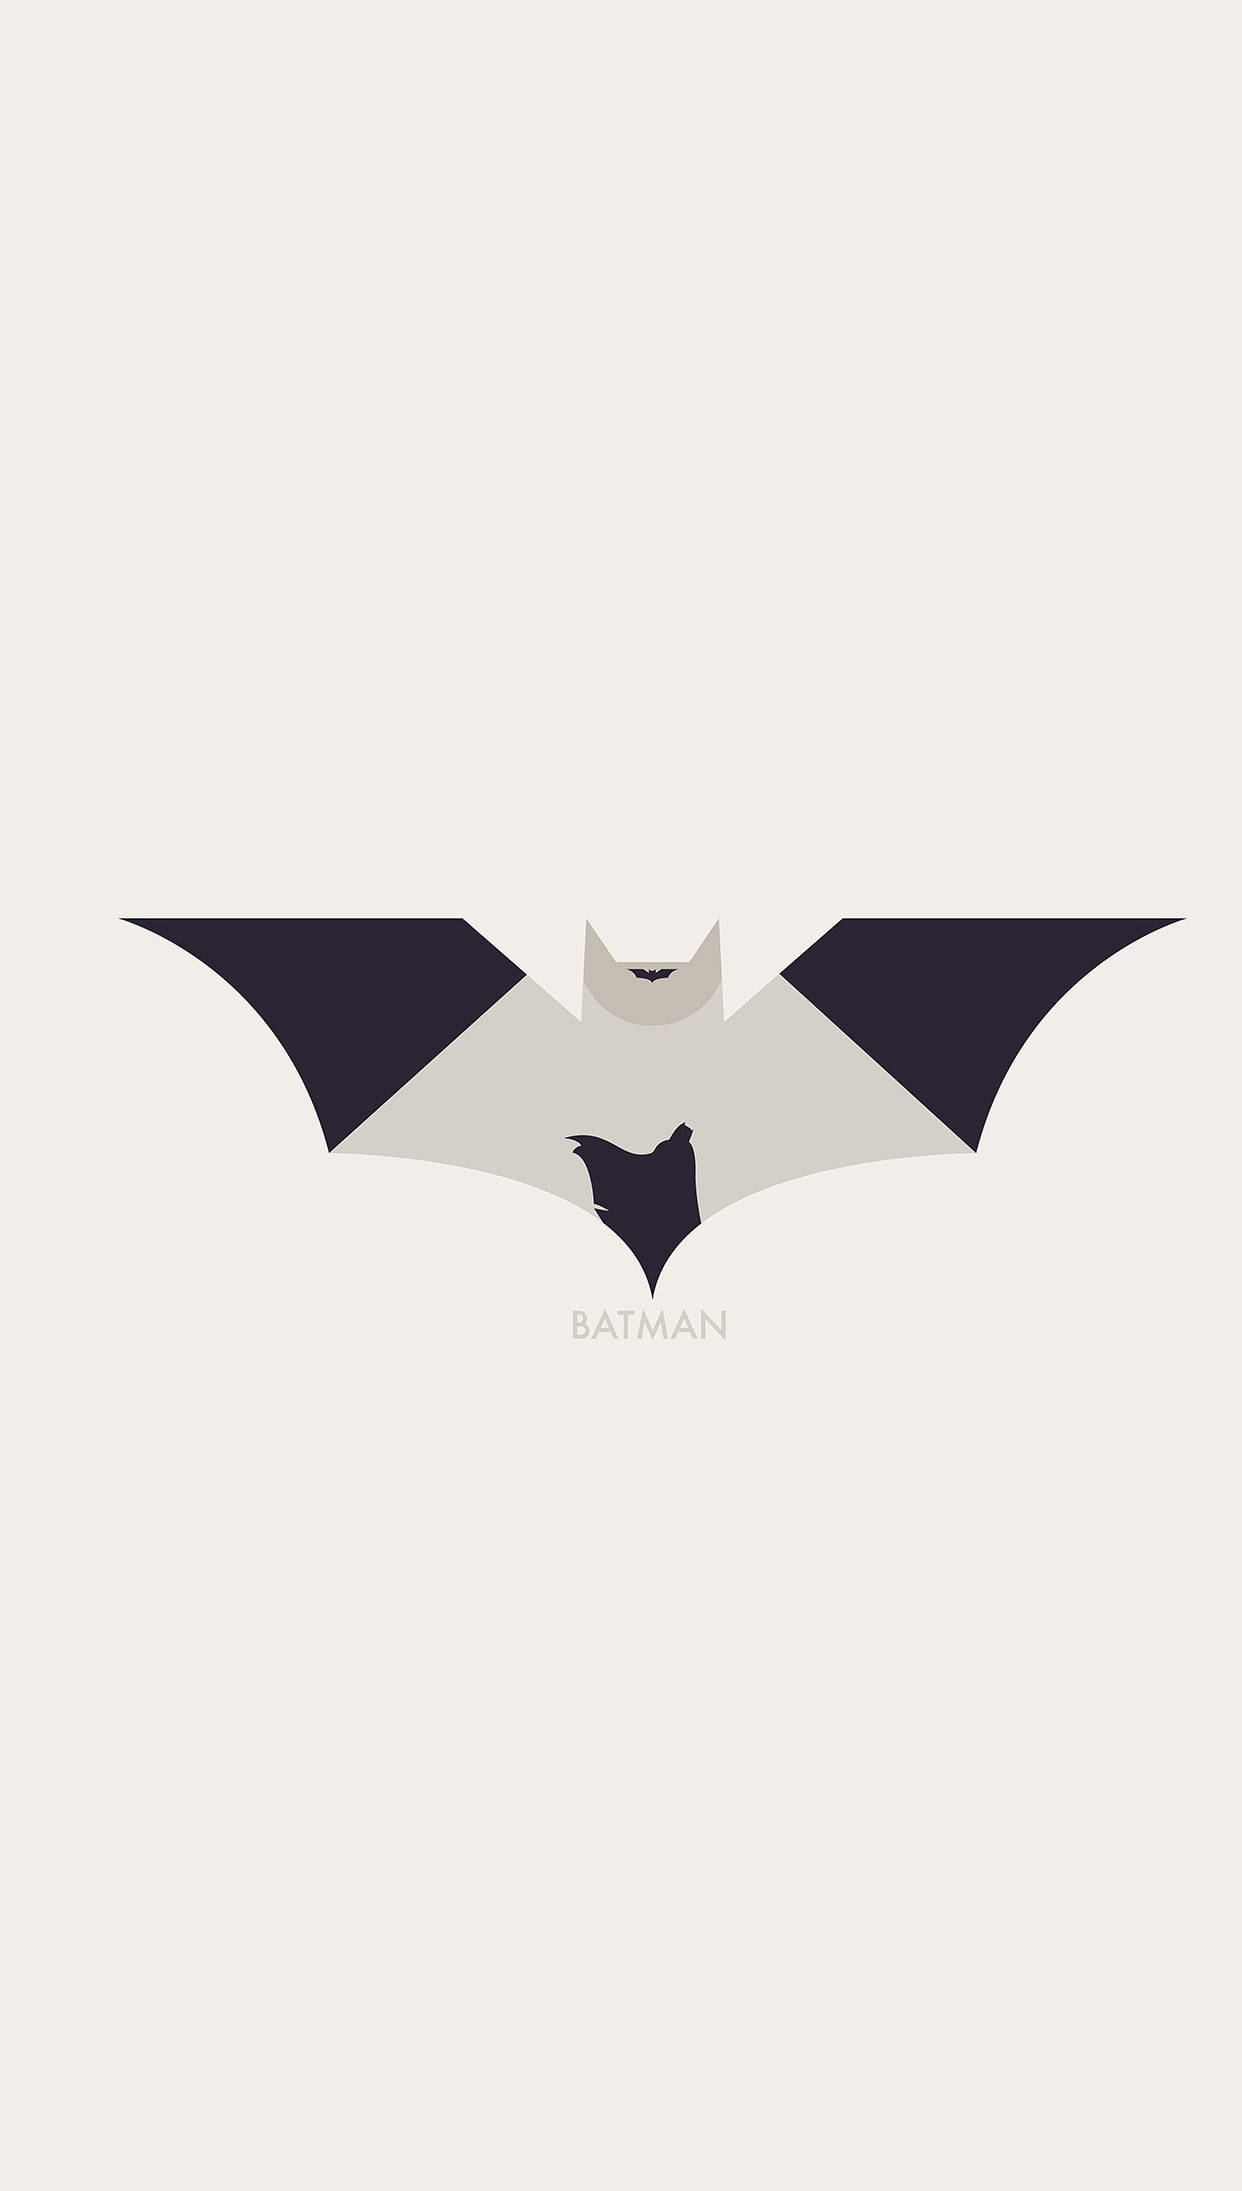 Fondode Pantalla De Iphone Con El Logotipo De Batman Con Capa. Fondo de pantalla